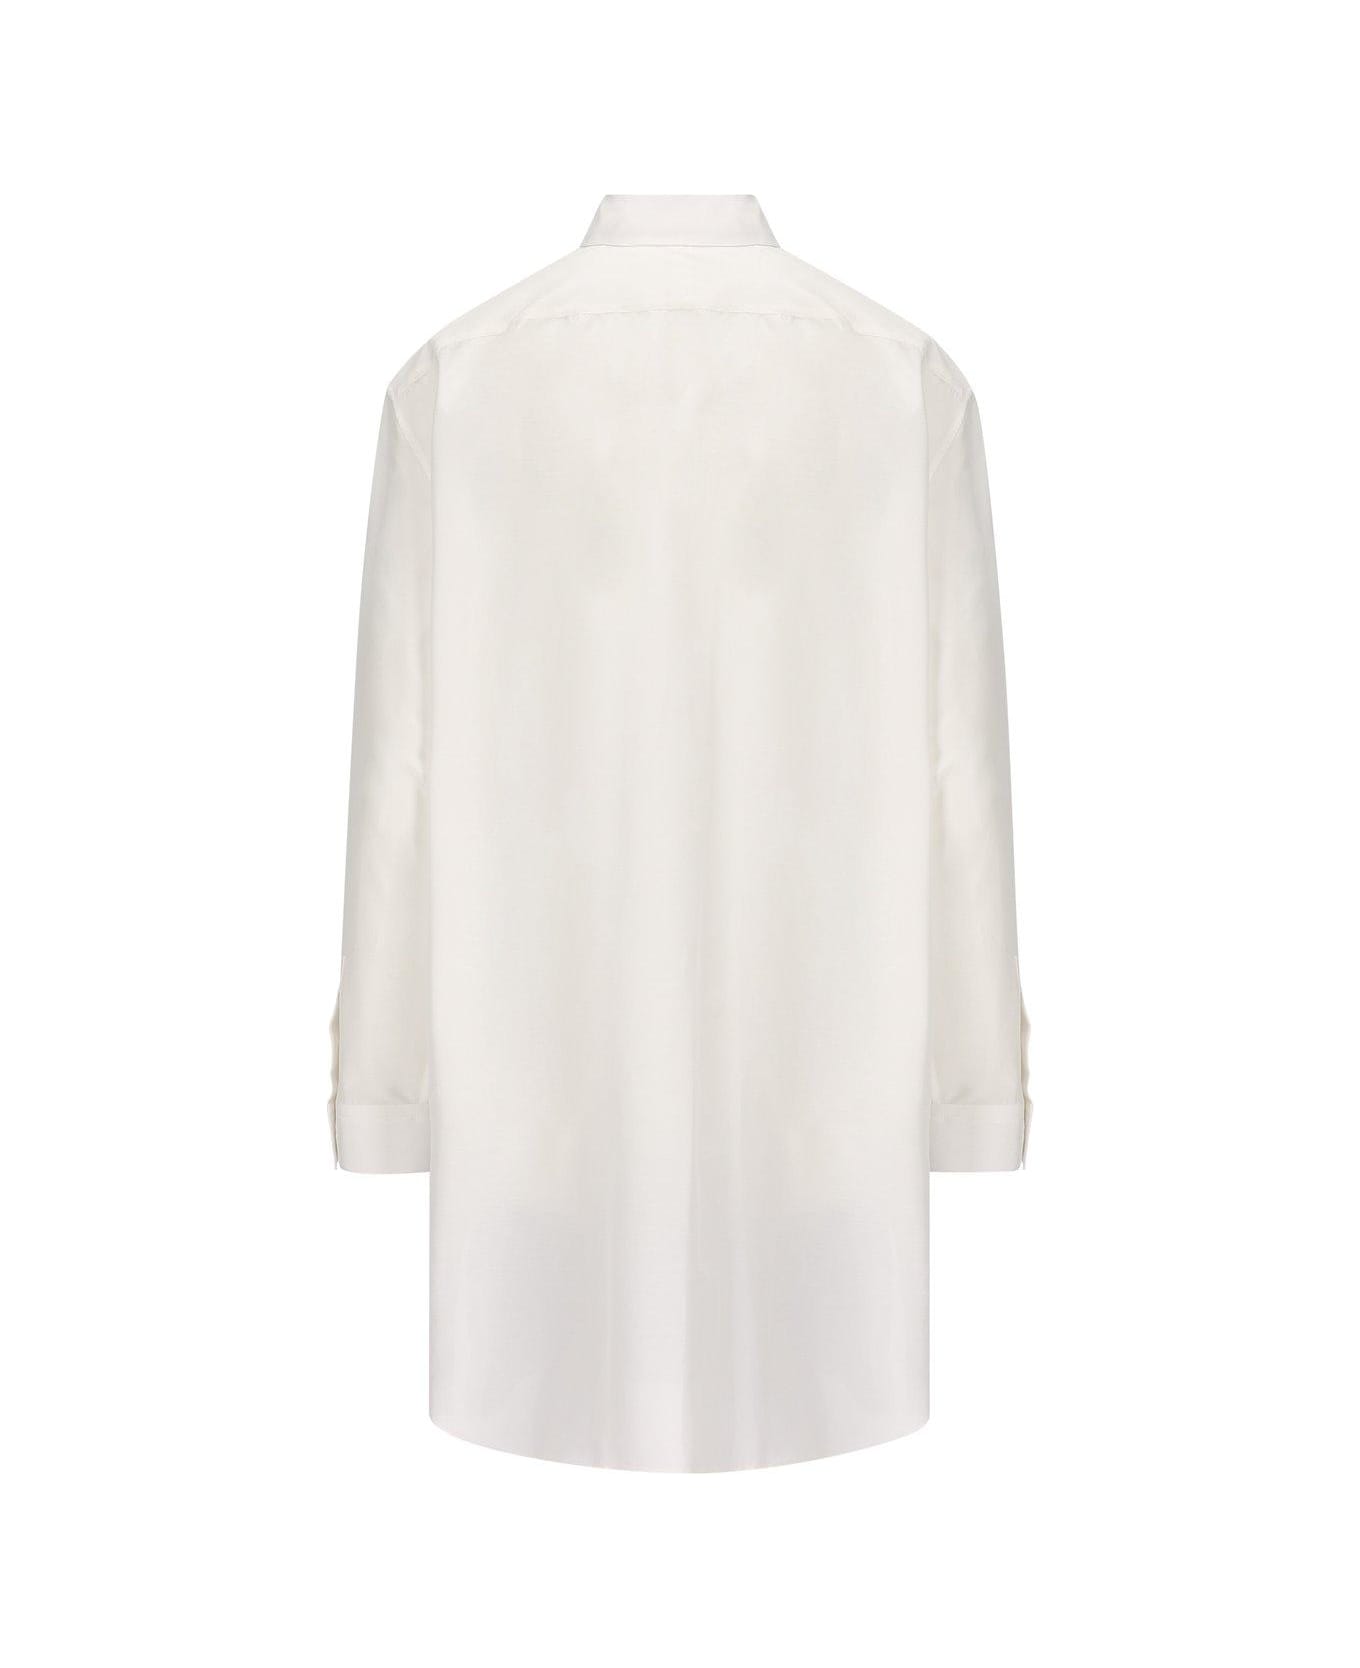 Loewe Double Layered Shirt Dress - White/blue